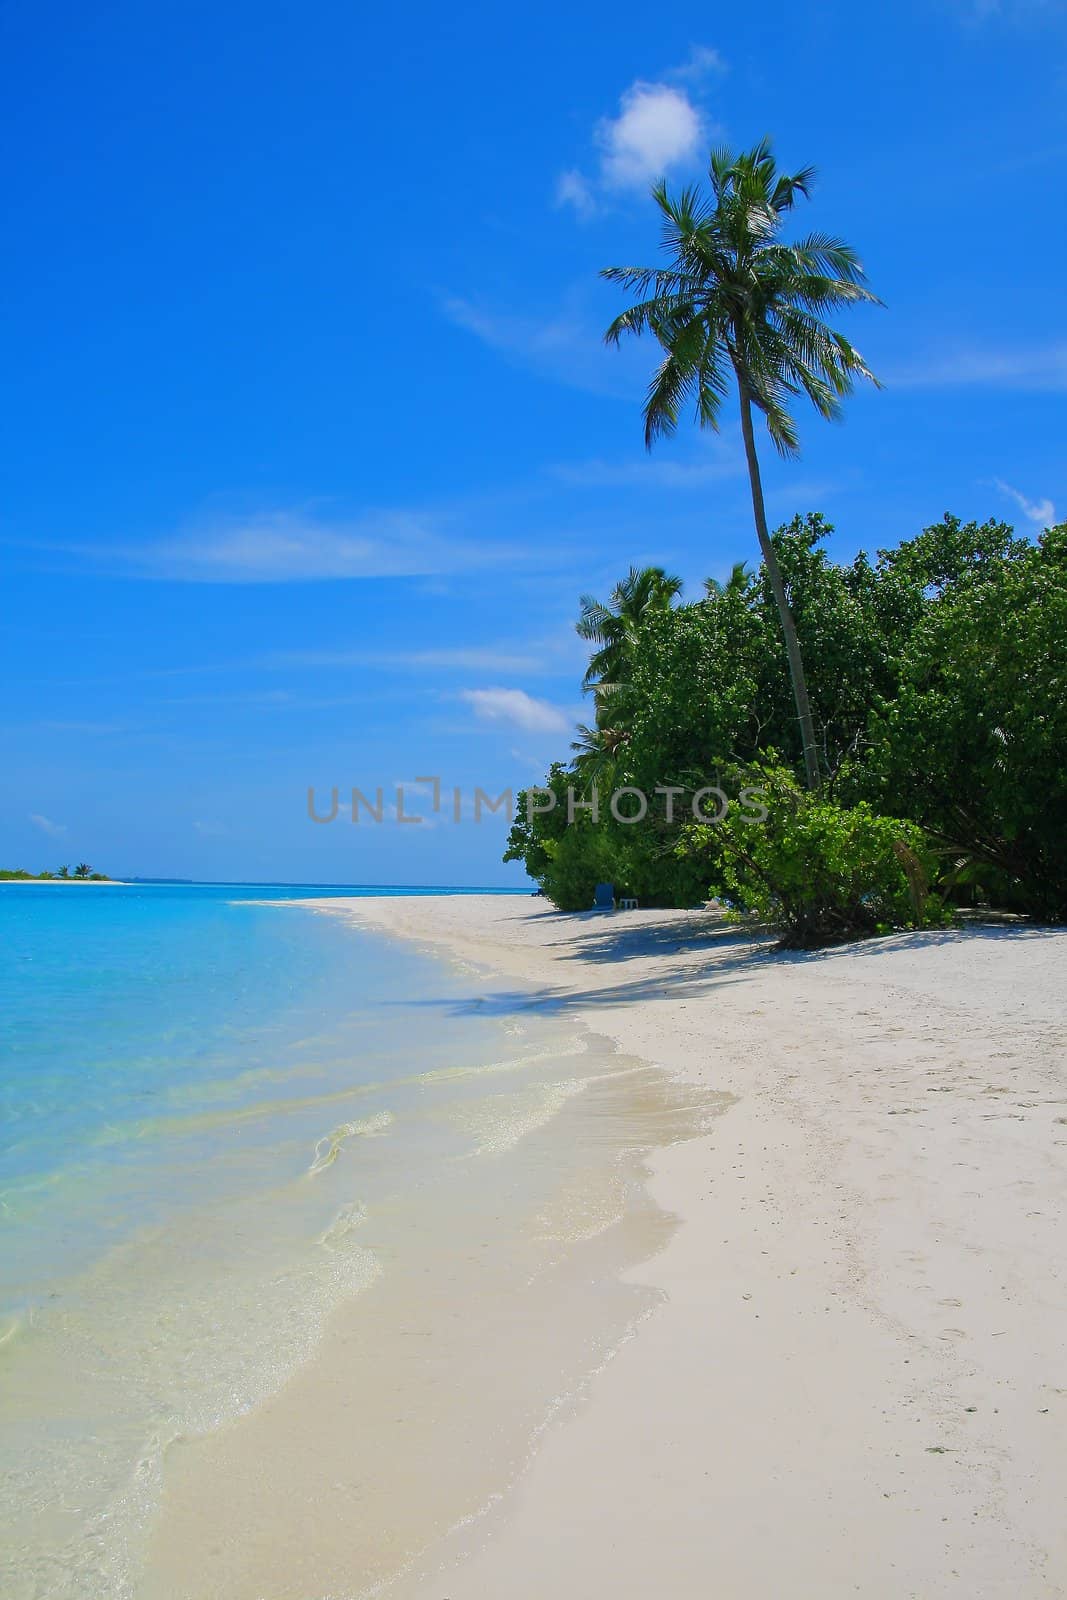 White beach and turquoise water on Meeru Island, Maldives